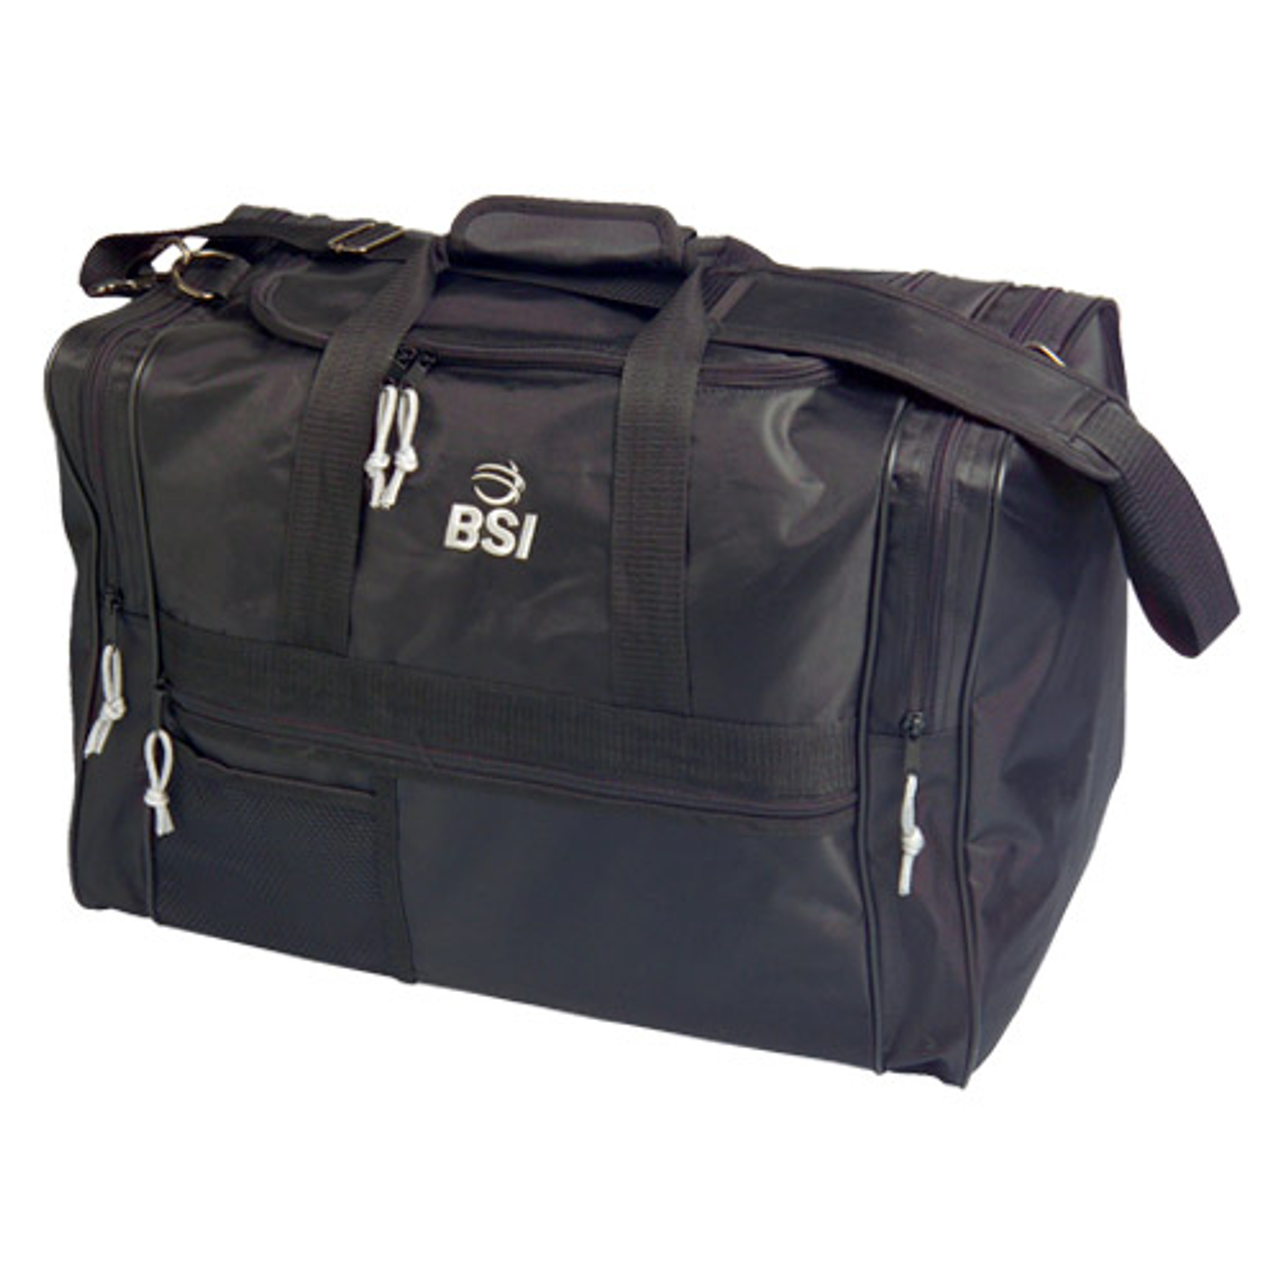 BSI Pro Double Tote Bag Black